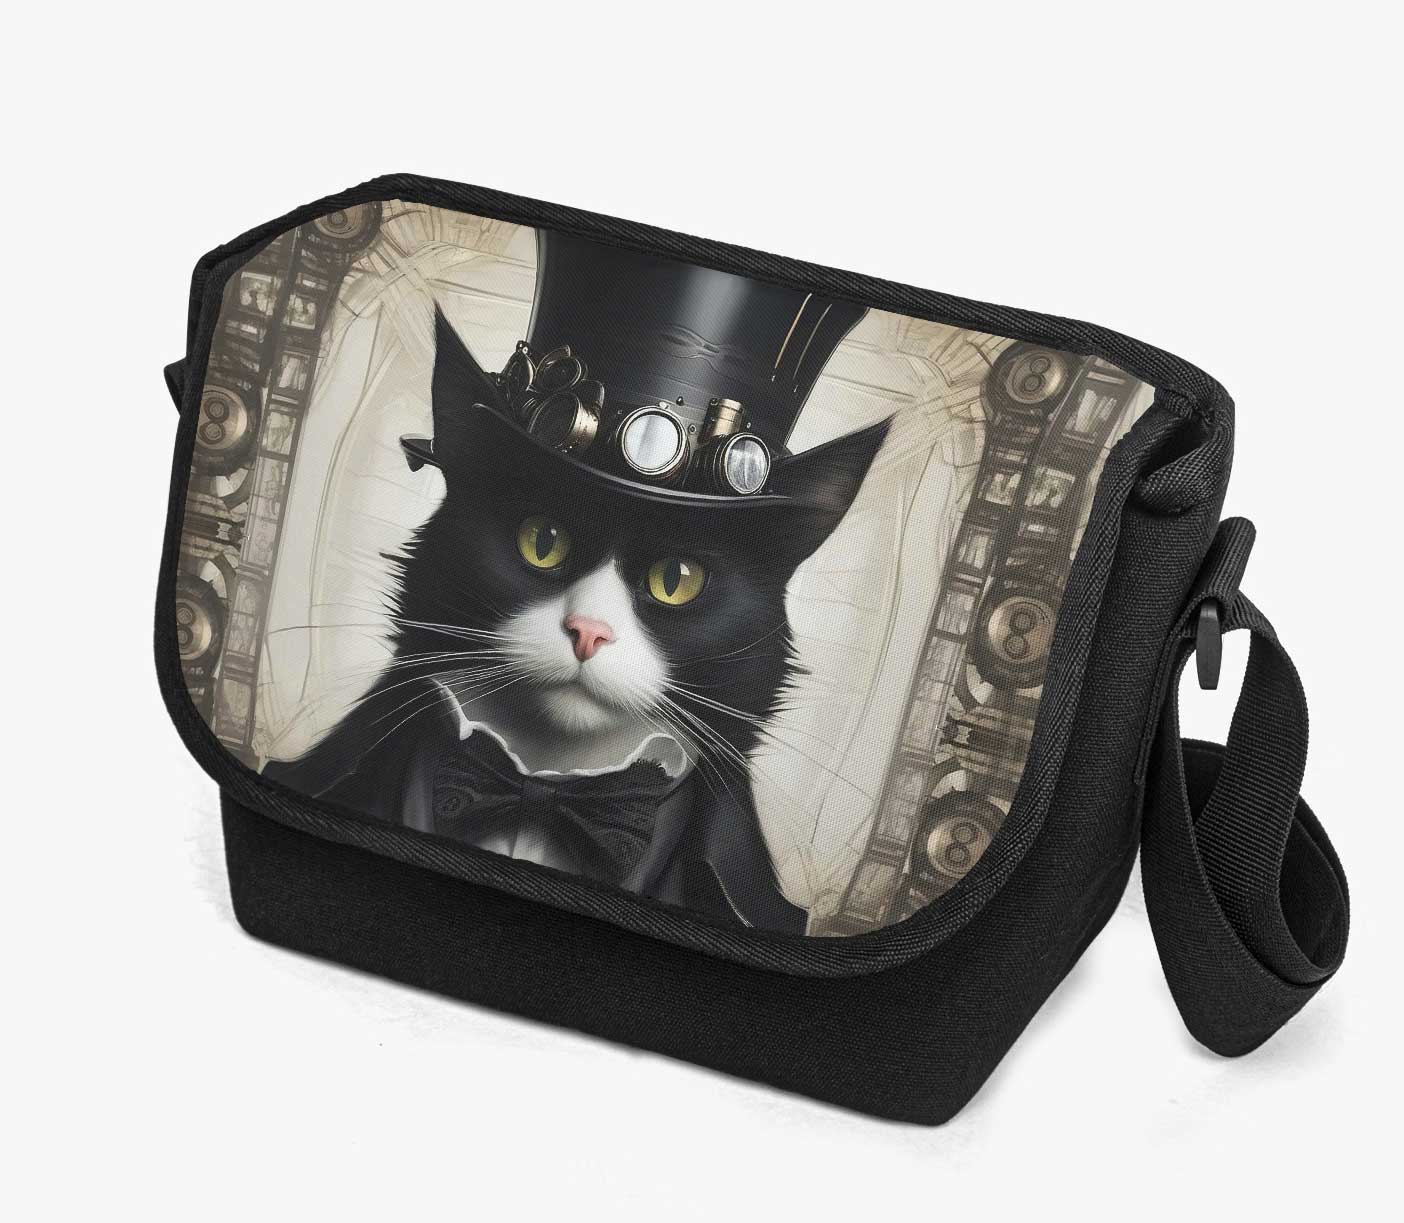 Steamcat Messenger Bag - Steampunk Cute Cat in a Top Hat School Bag (JPSTEAMCM)